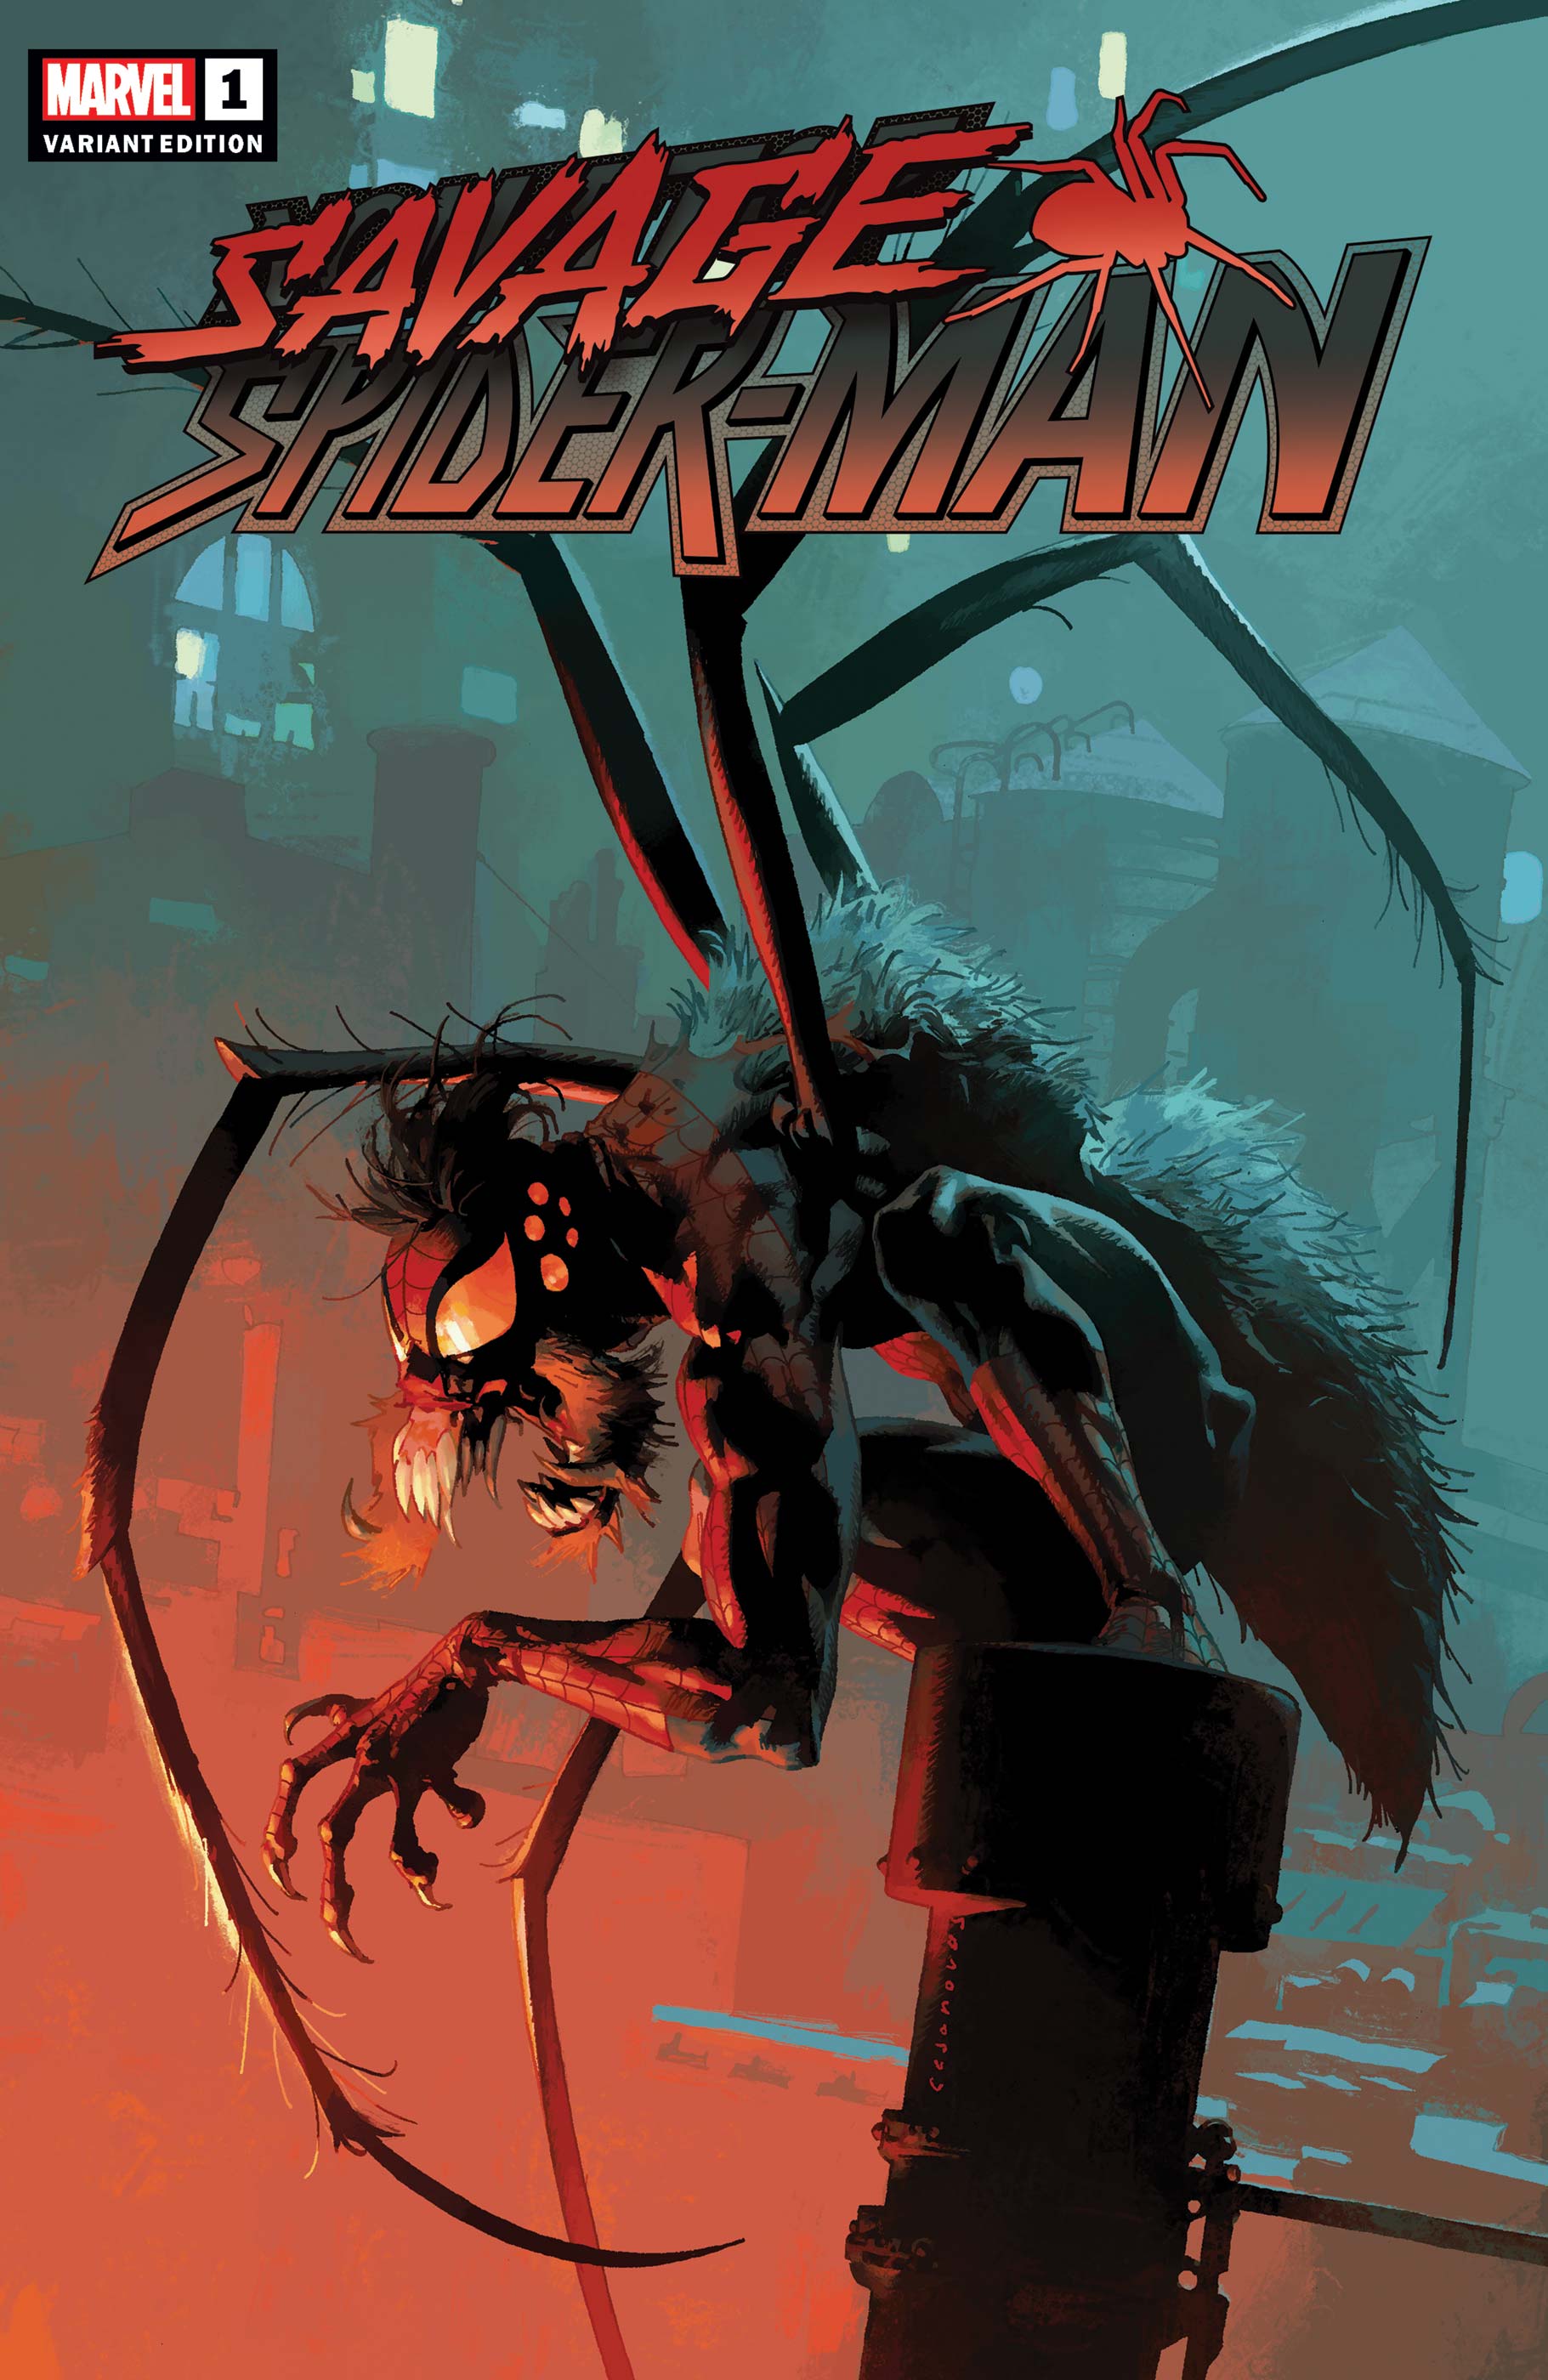 Savage Spider-Man (2022) #1 (Variant)